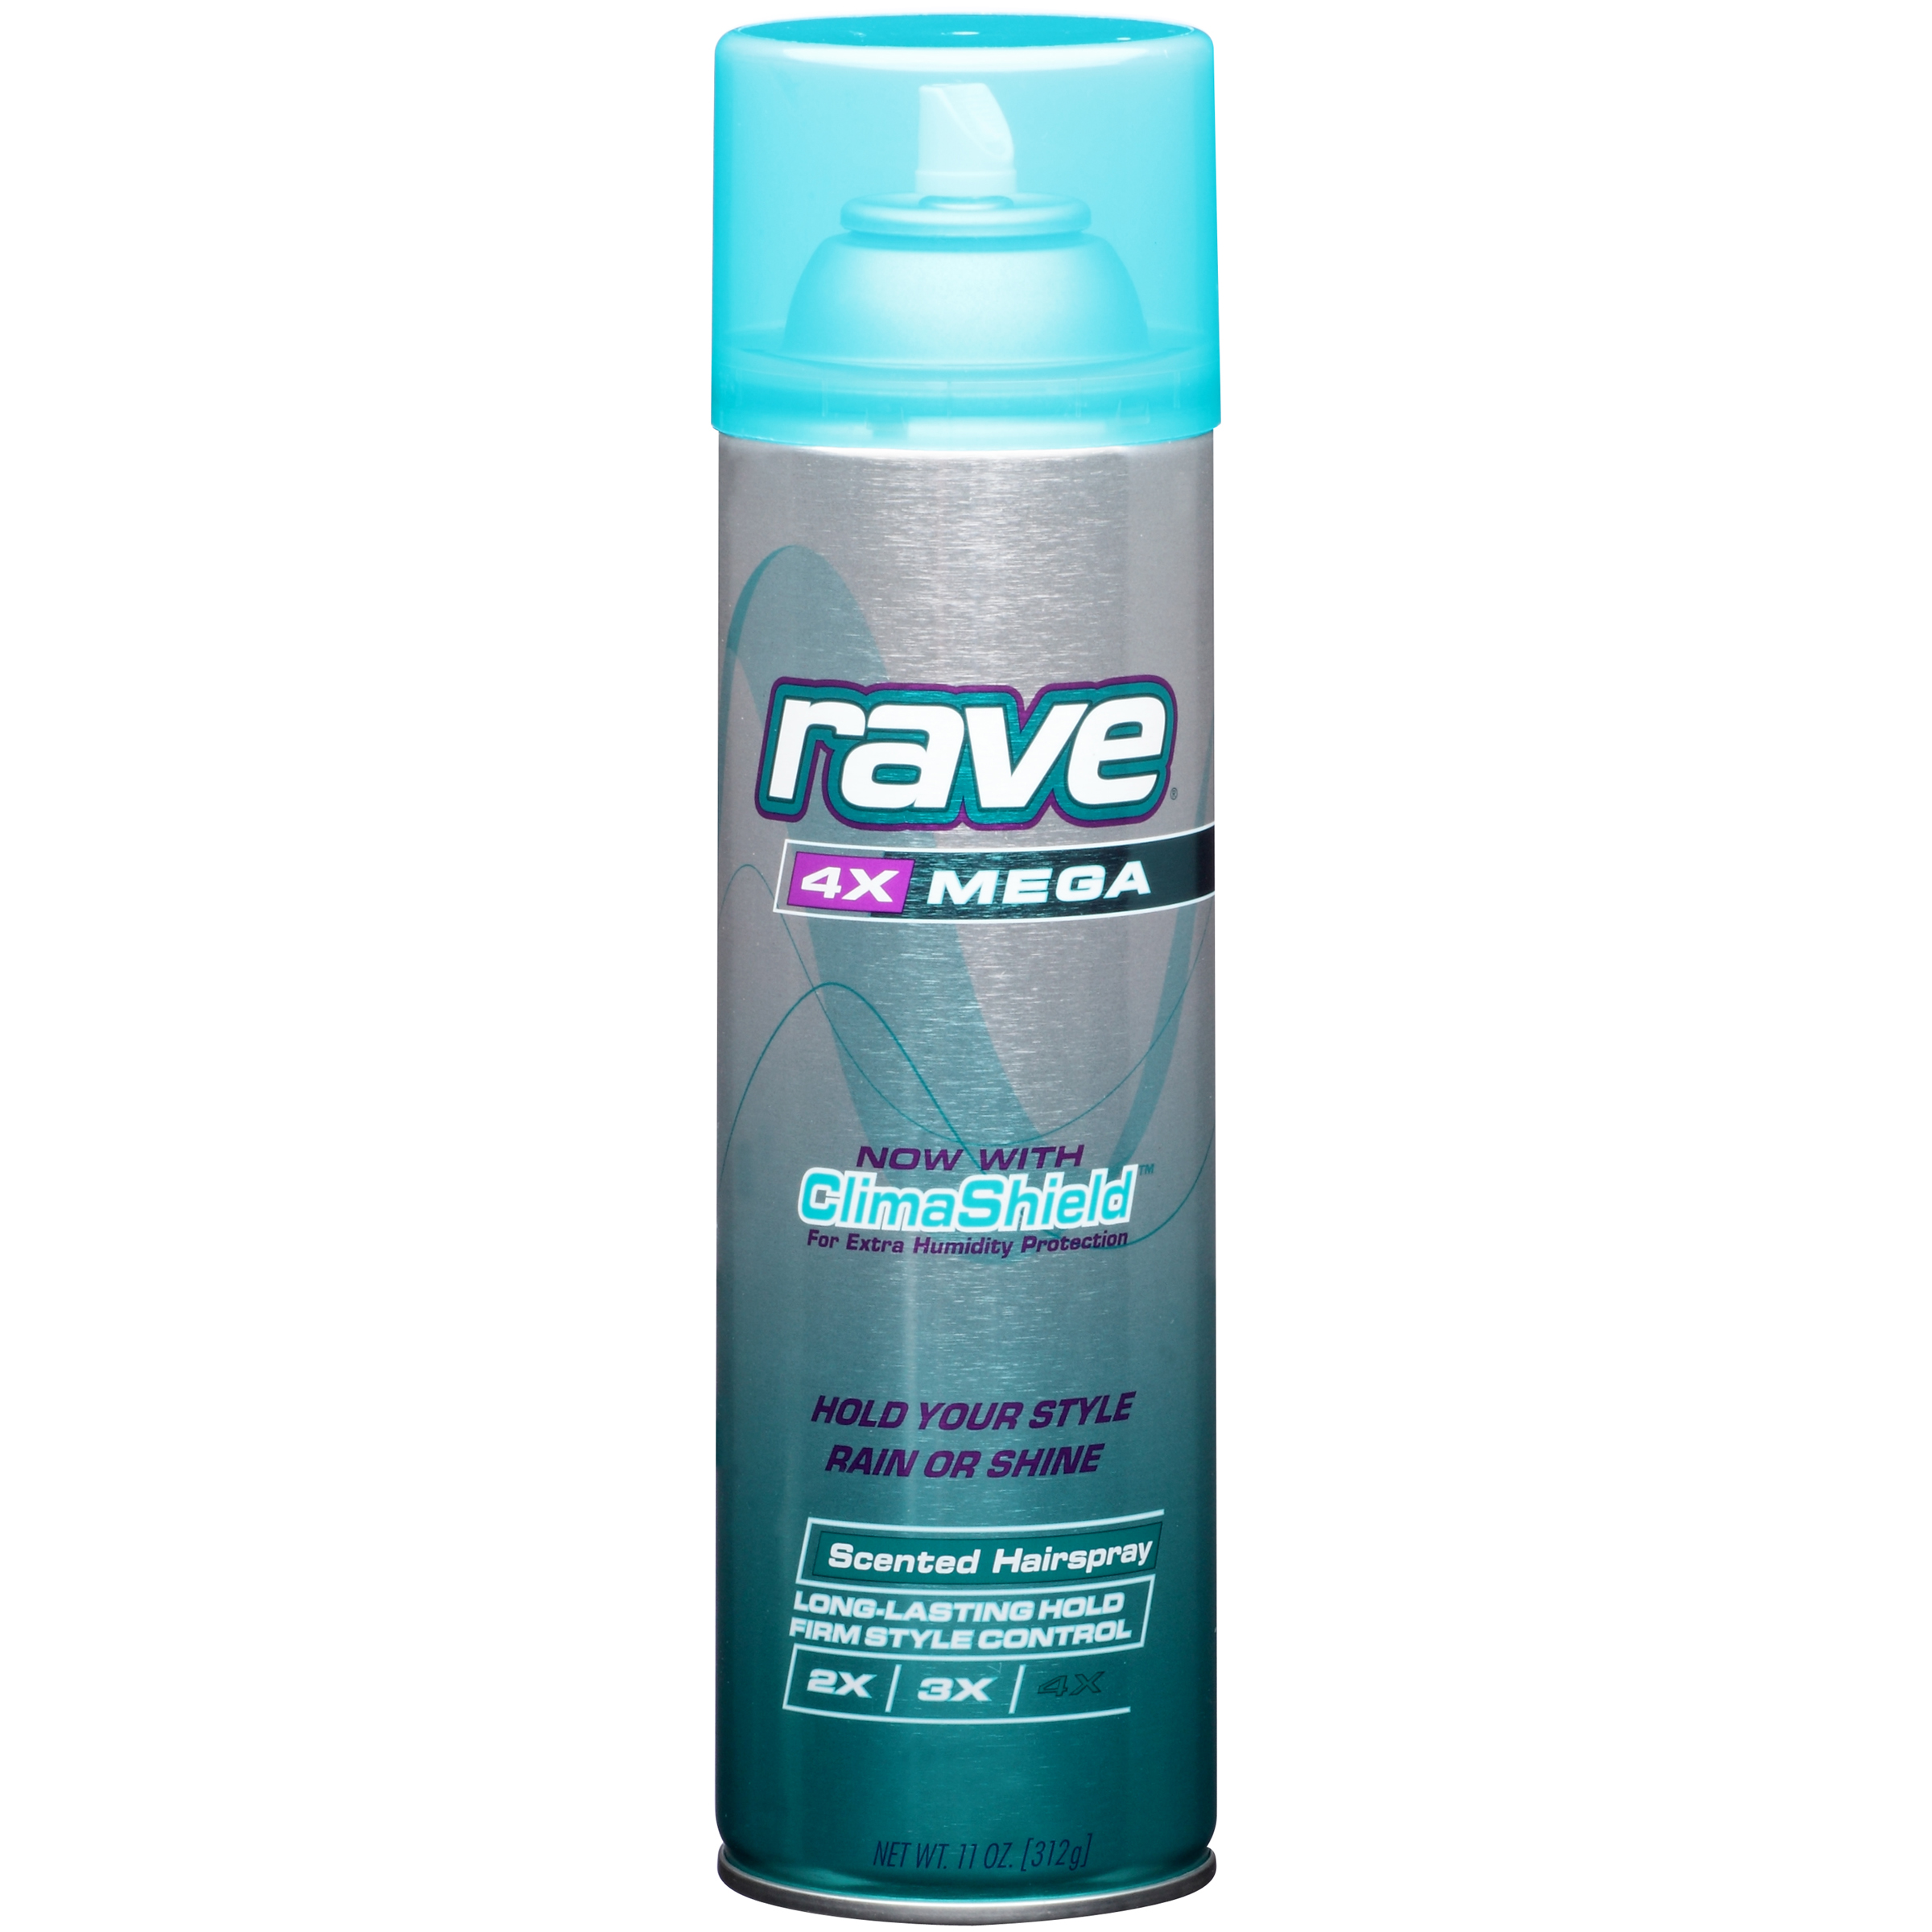 Rave Hairspray, 4x Mega Scented, 11 oz (312 g)